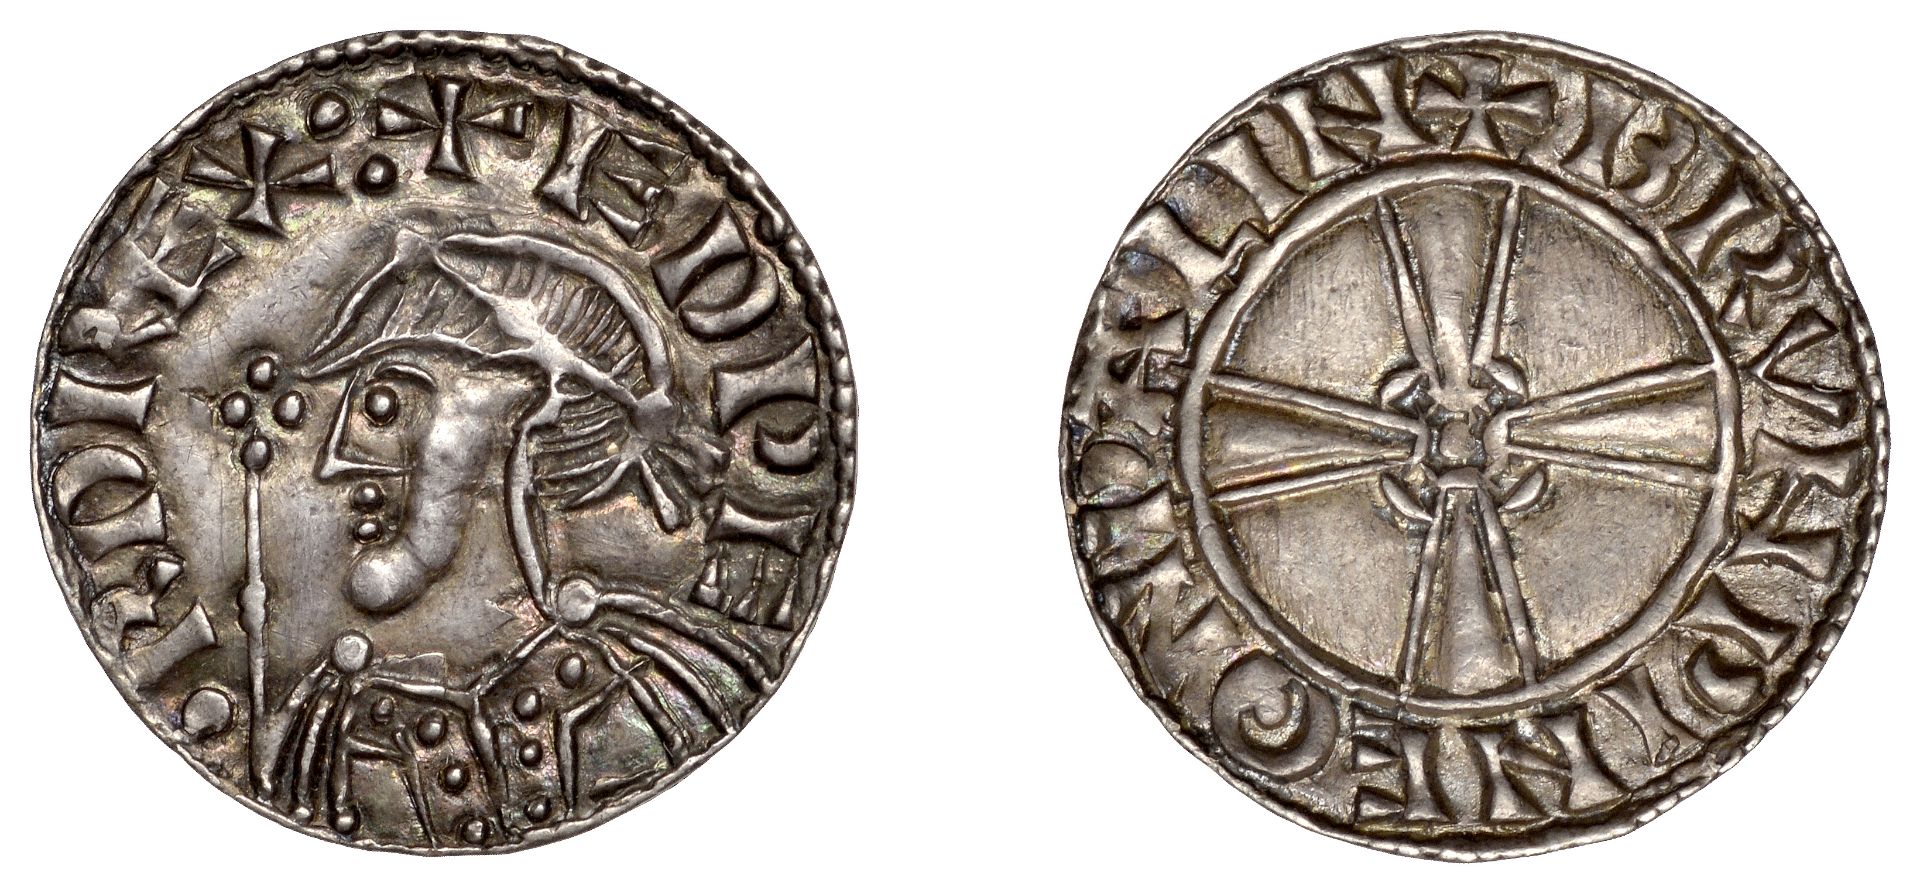 Edward the Confessor (1042-1066), Penny, Expanding Cross type [BMC v], Heavy issue, Wallingf...